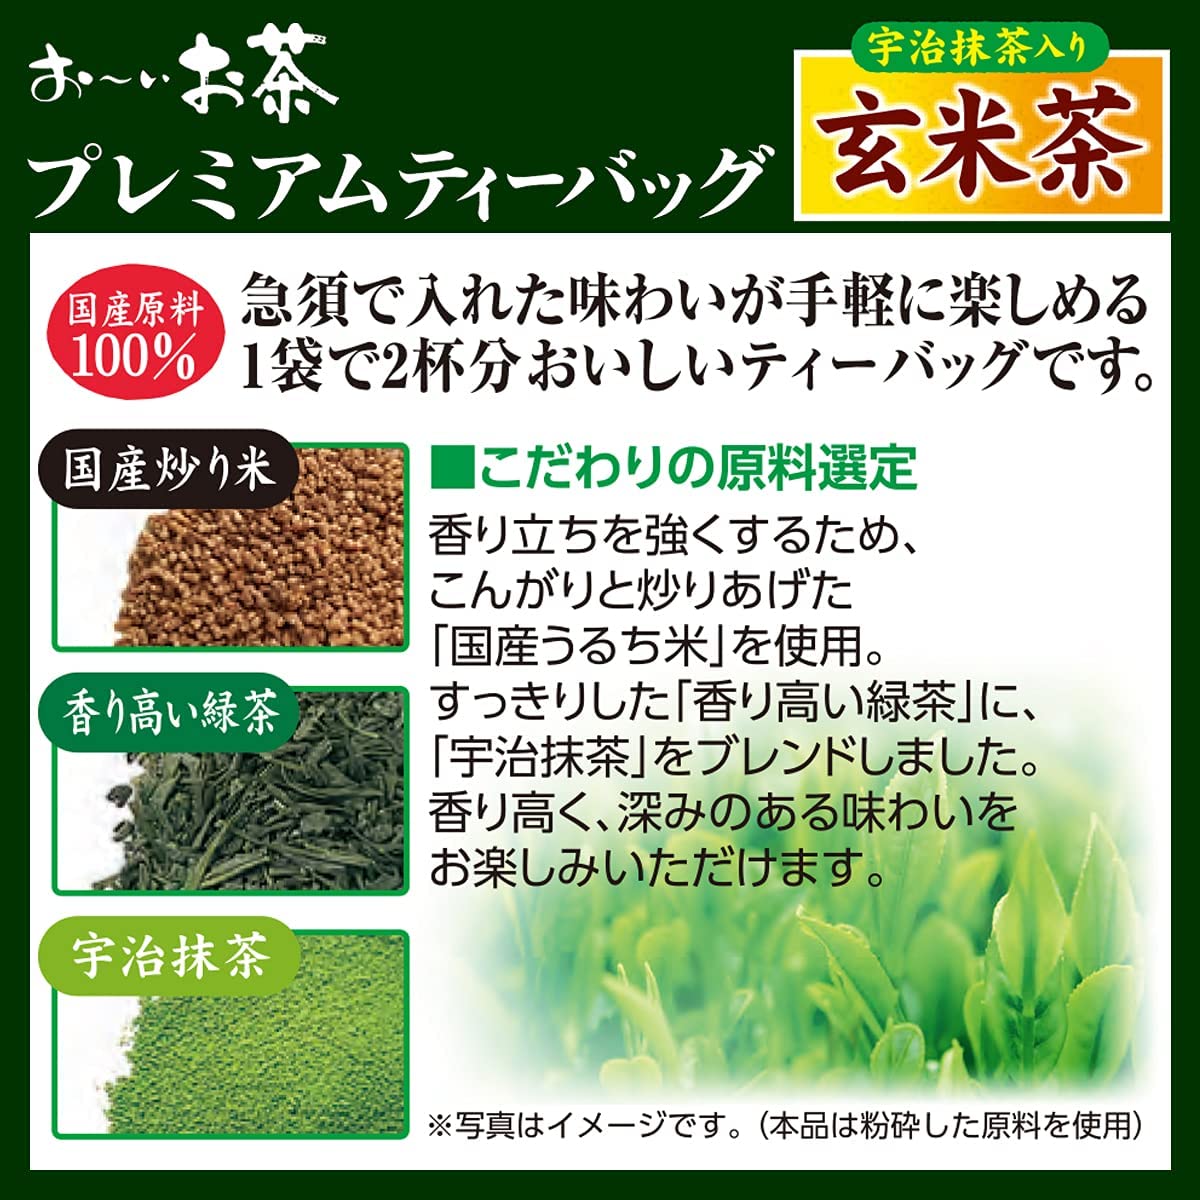 Itoen Oi Ocha Premium Tea Bag Genmaicha with Uji Matcha 2.3g x 50 bags